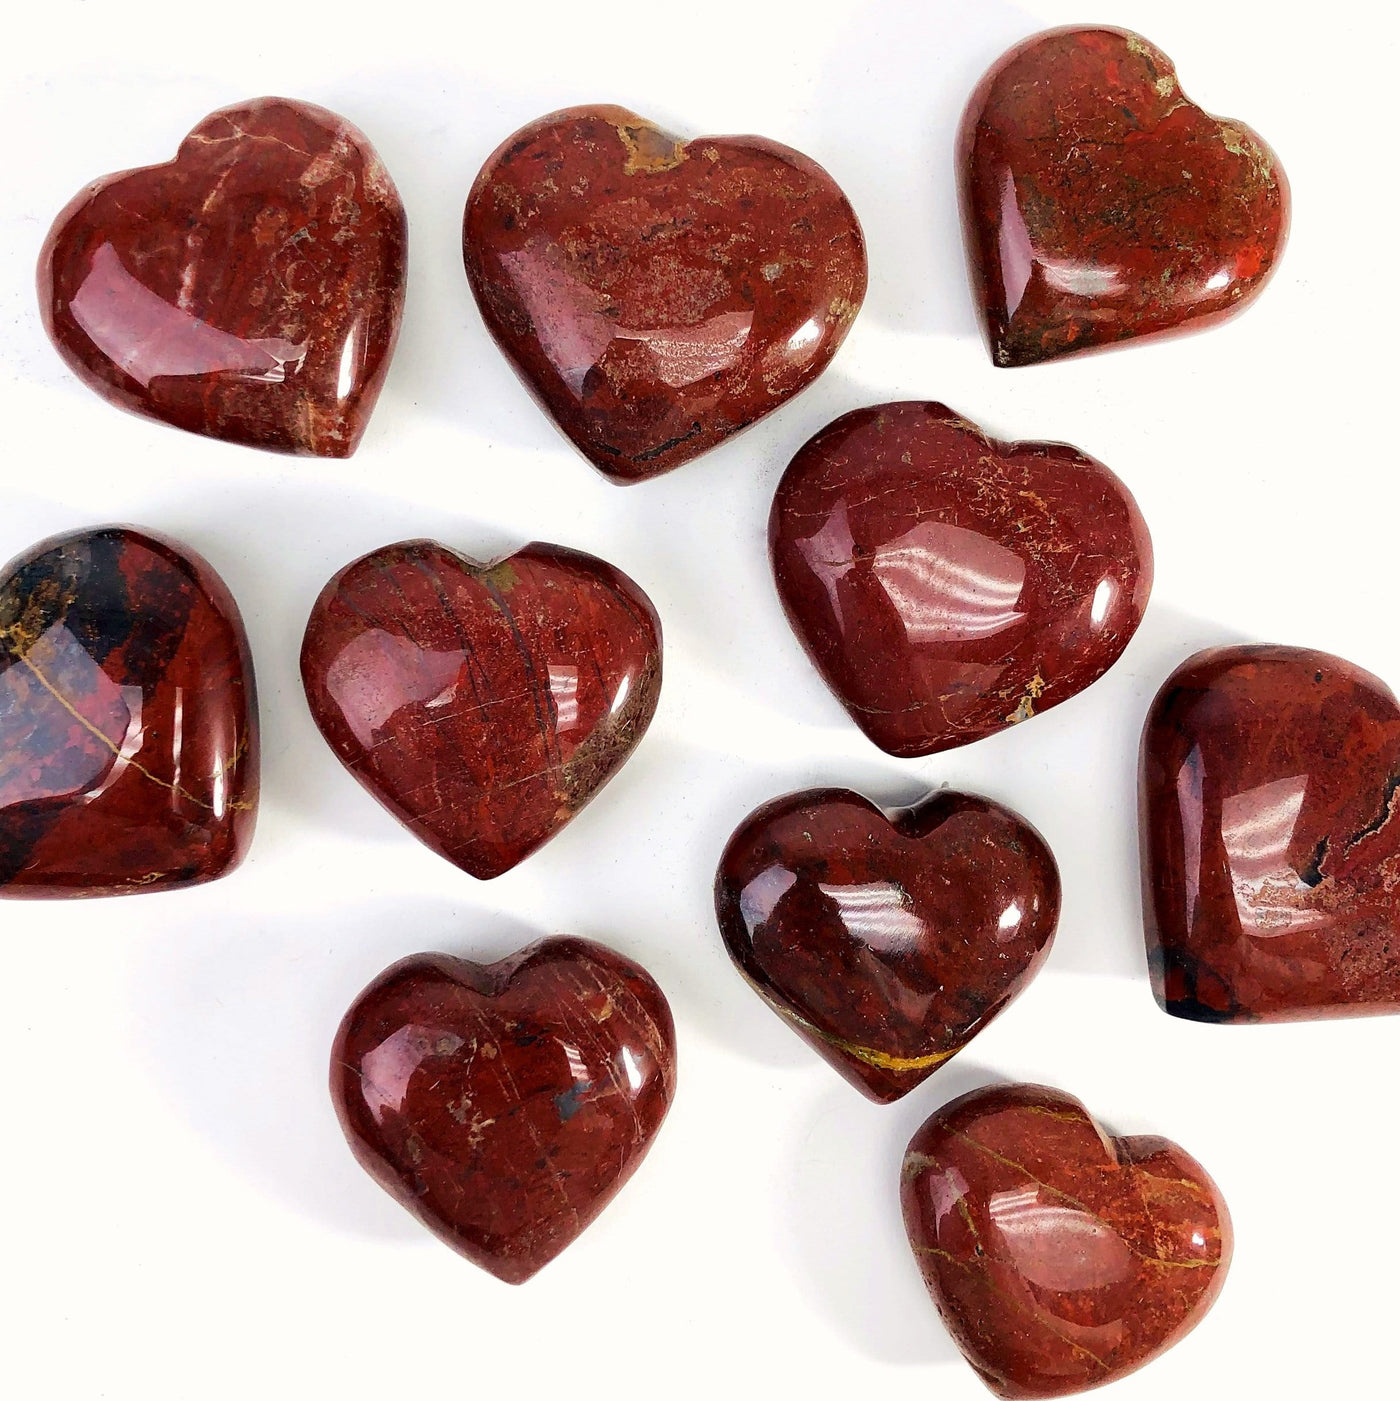 Red Jasper Heart Shaped Stones scattered on white background